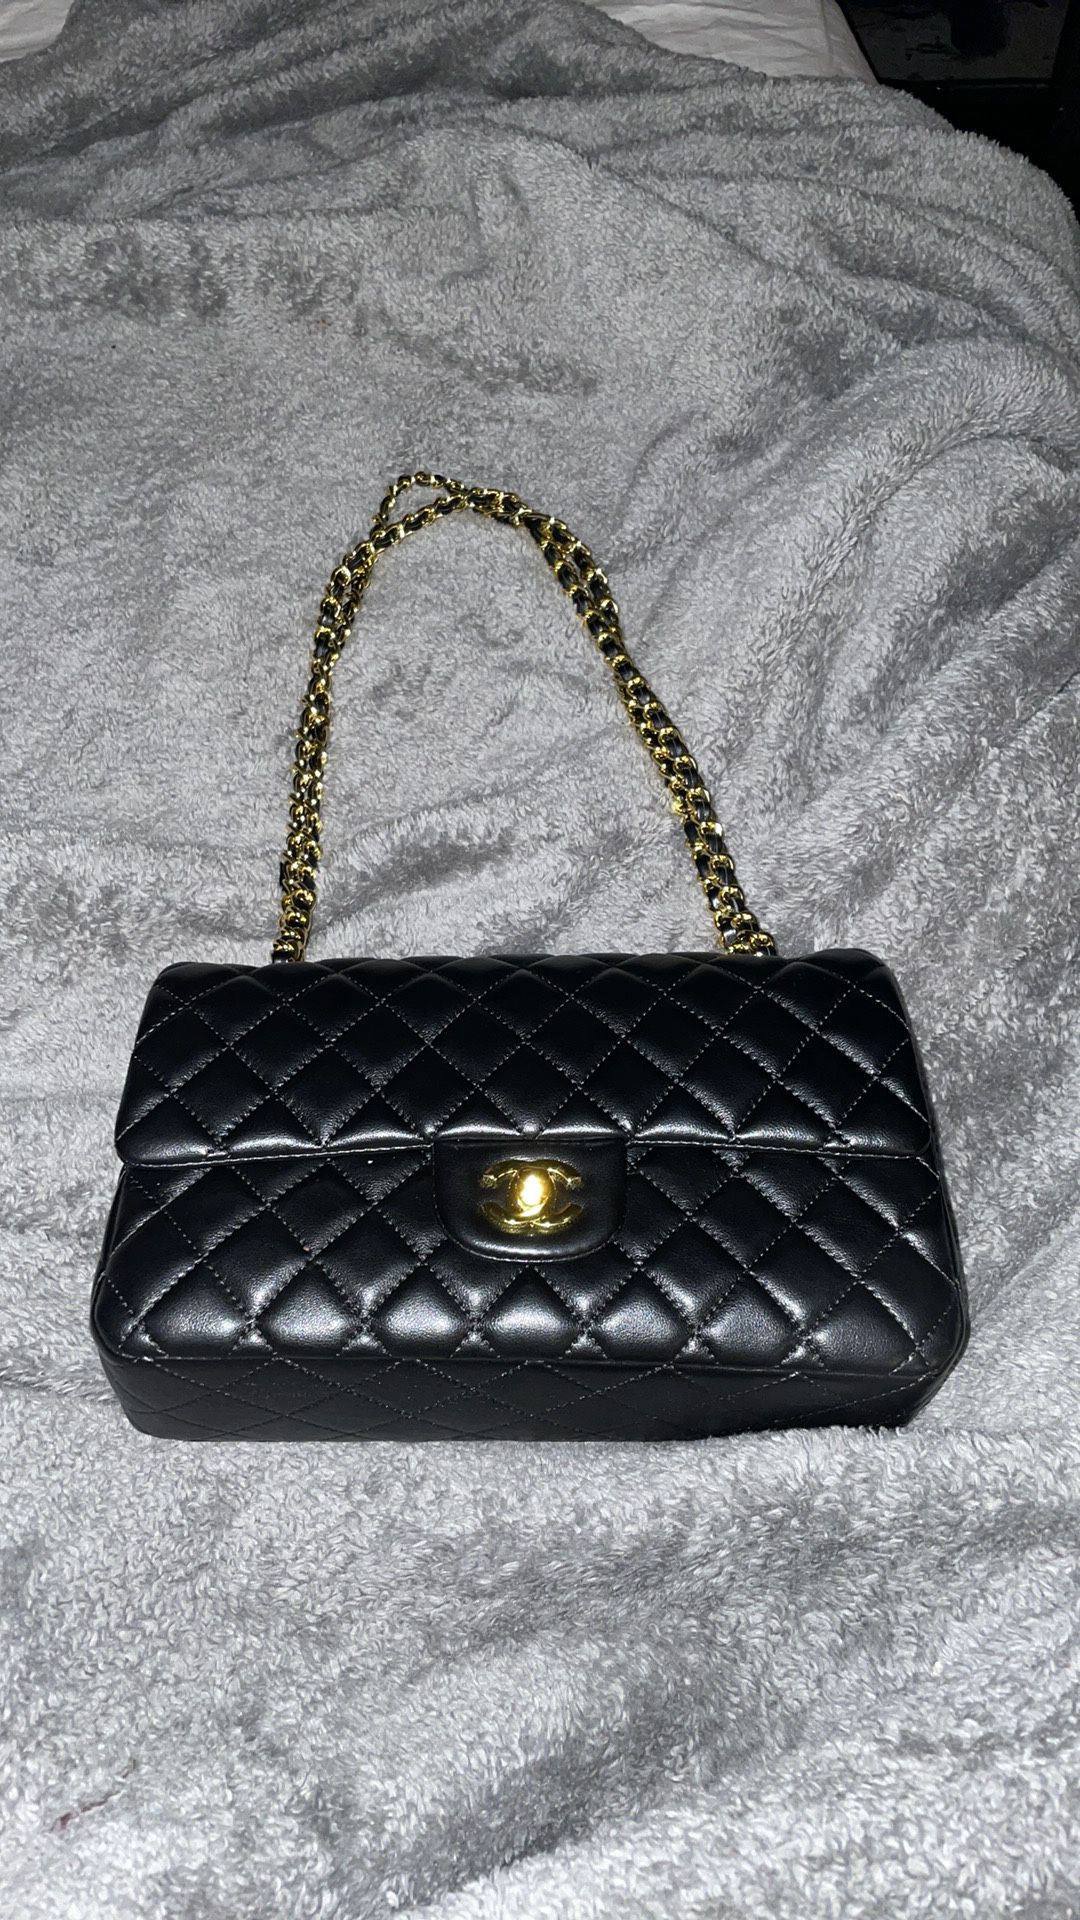 Classic Chanel Handbag